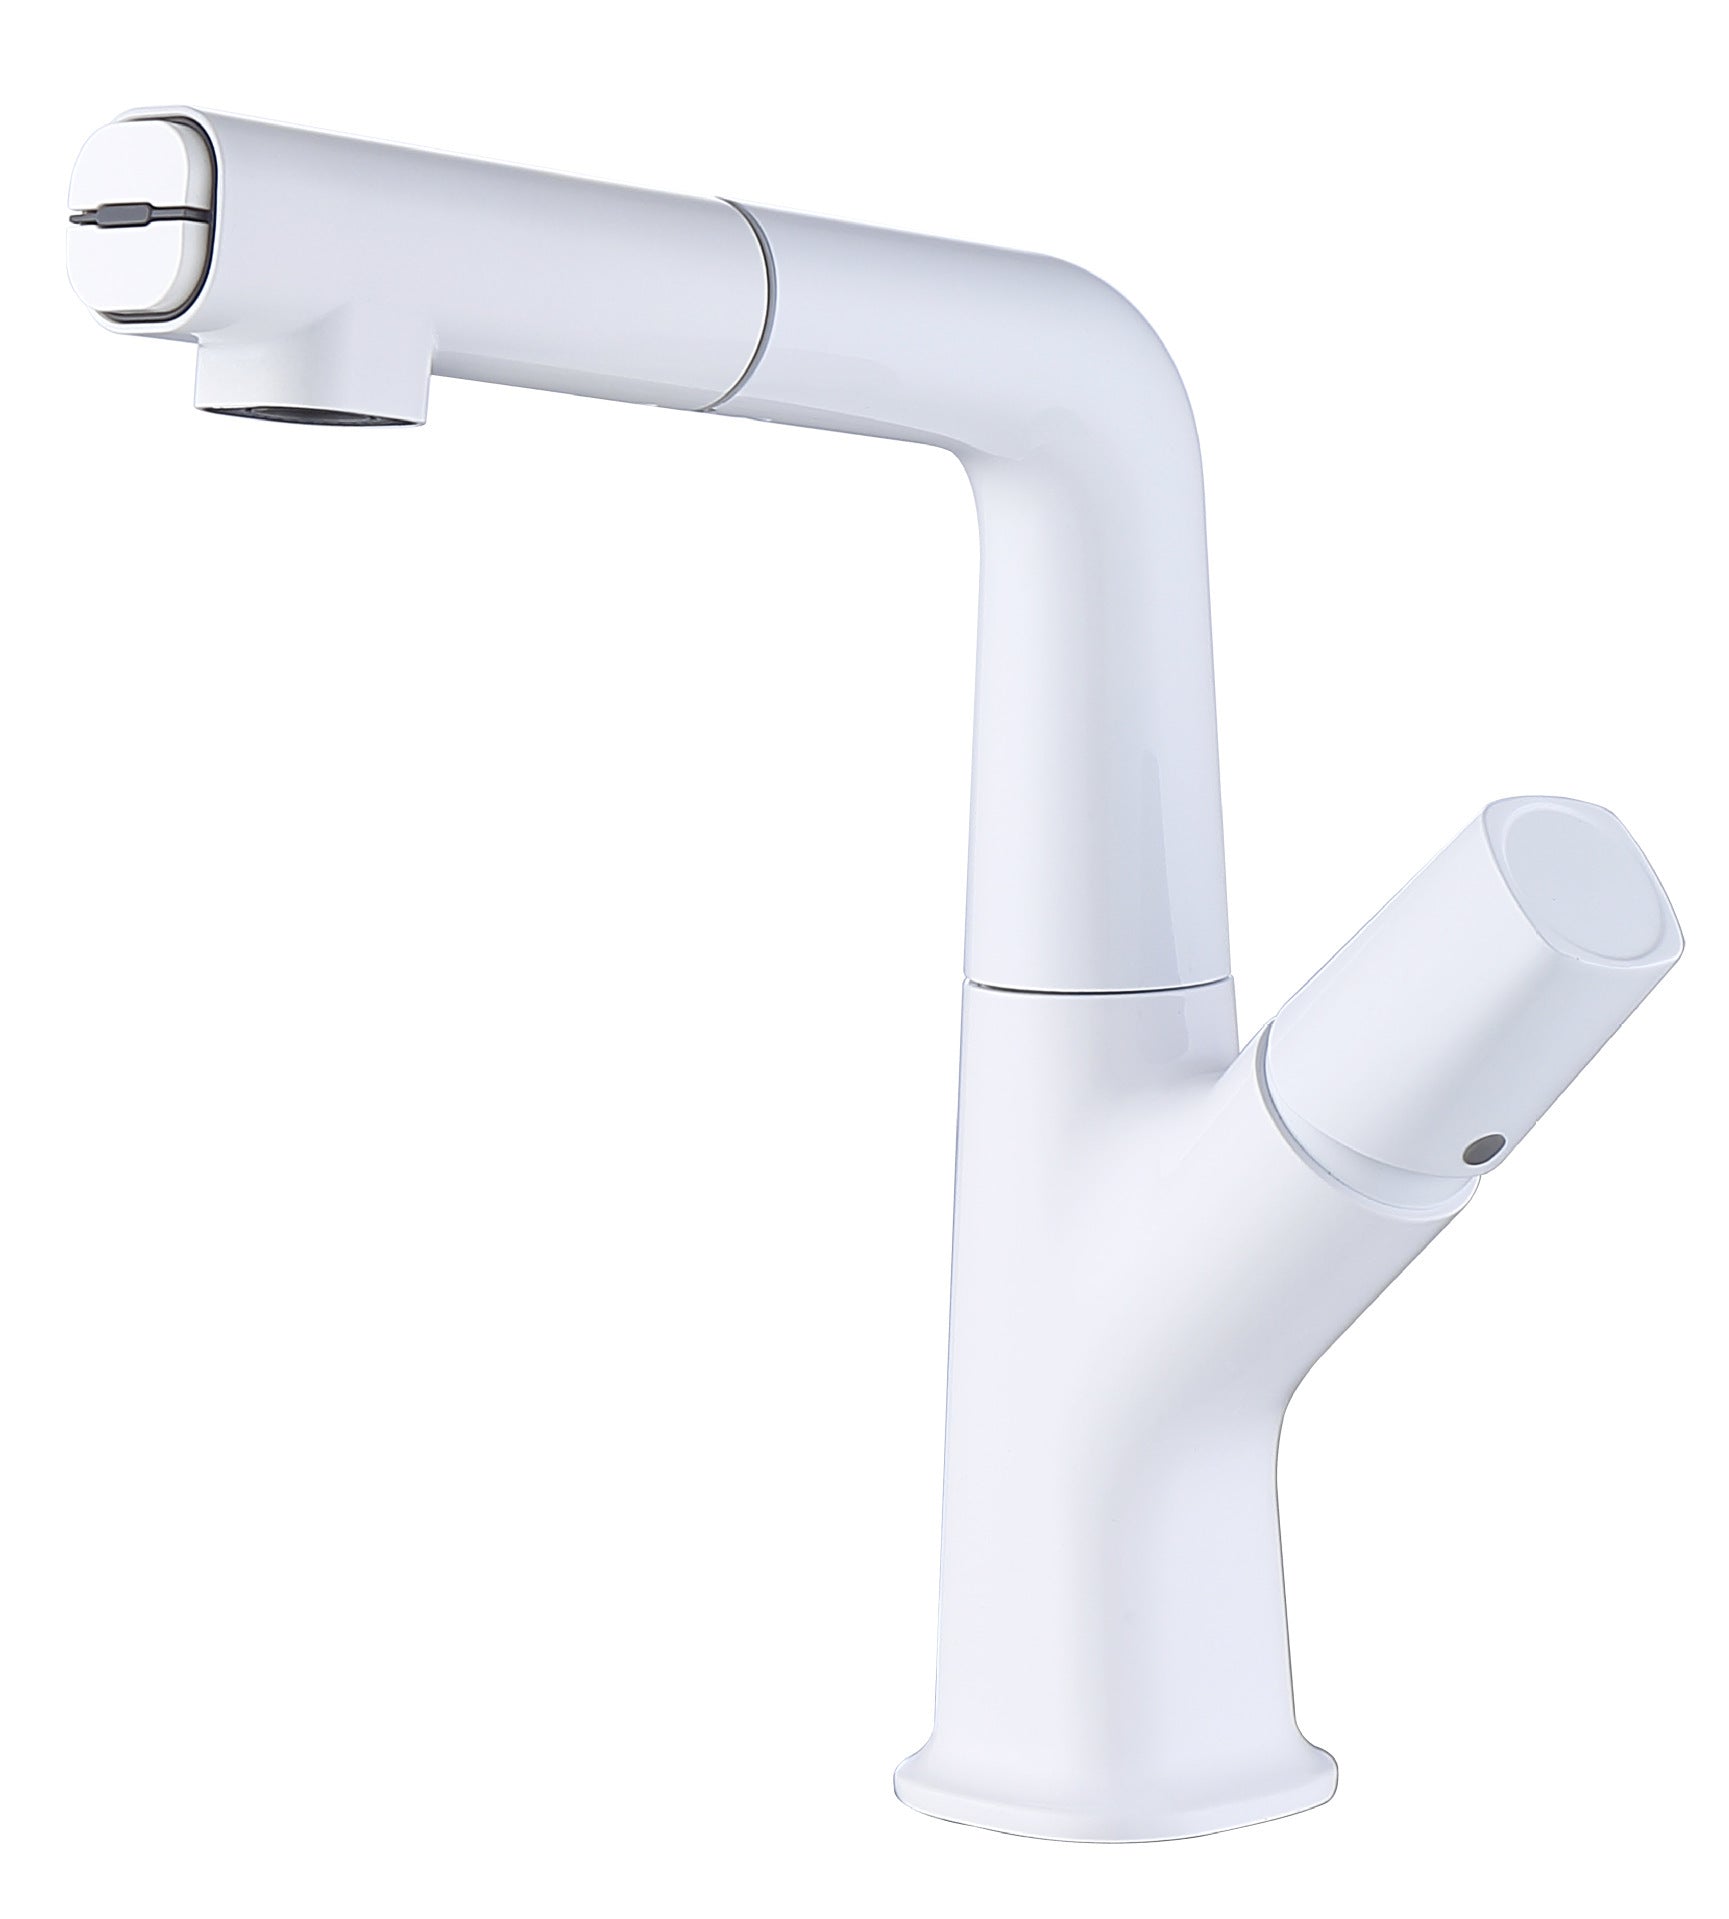 Vessel Sink Faucet Contemporary Single Handle Faucet with Swivel Spout